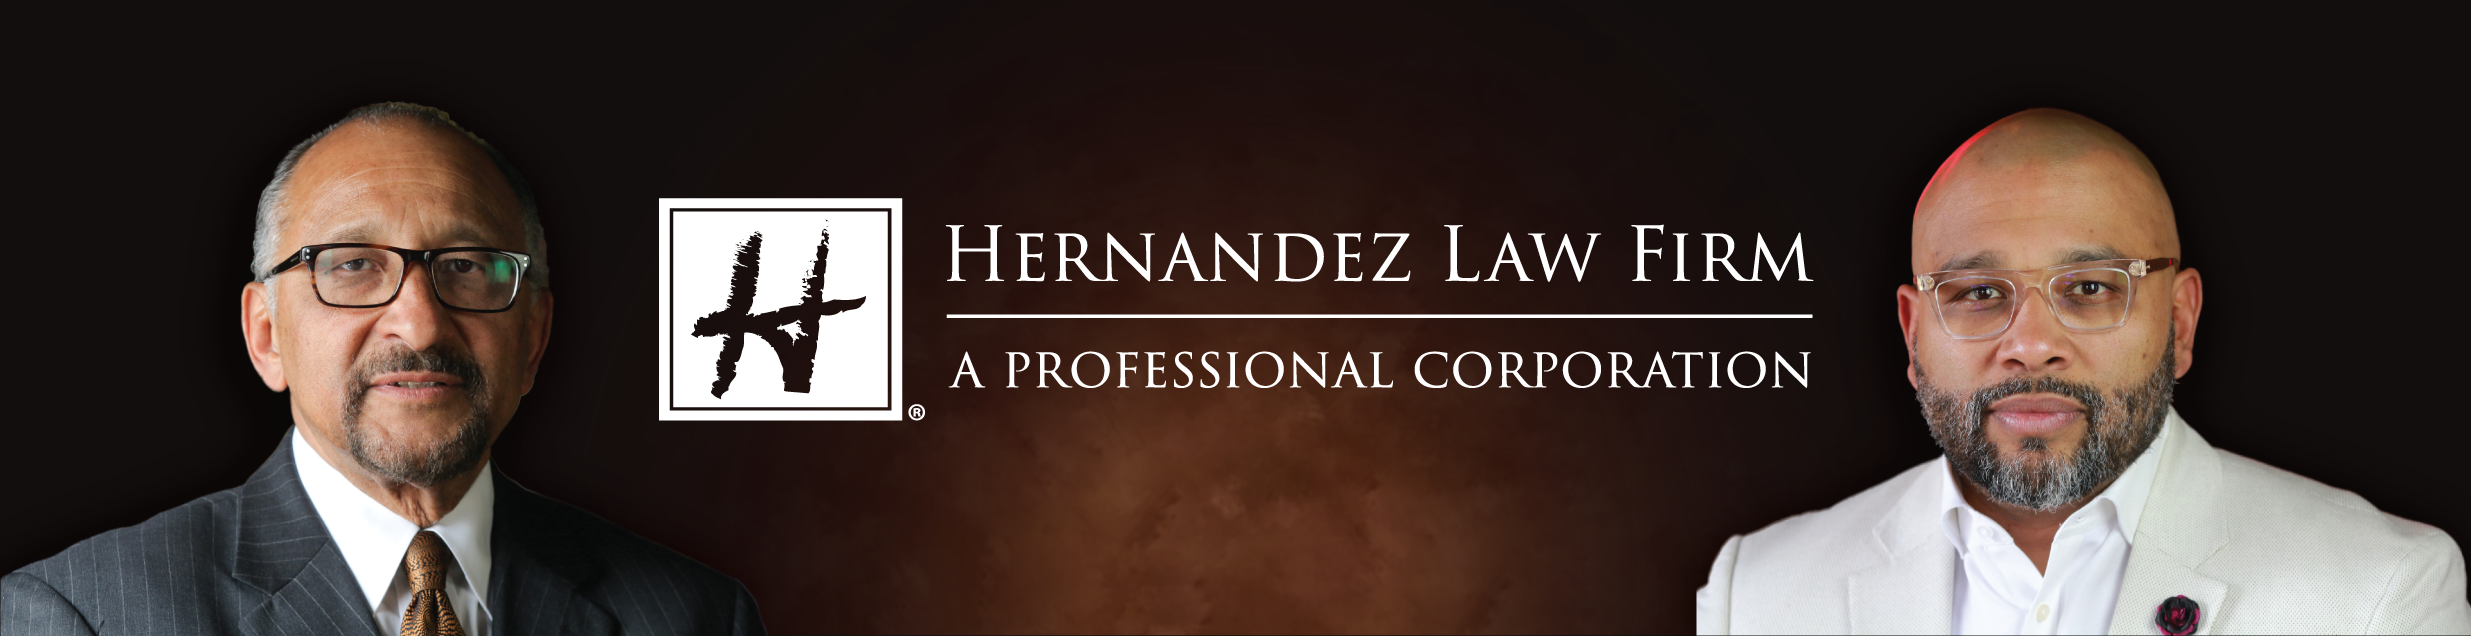 Hernandez Law Firm Attorneys